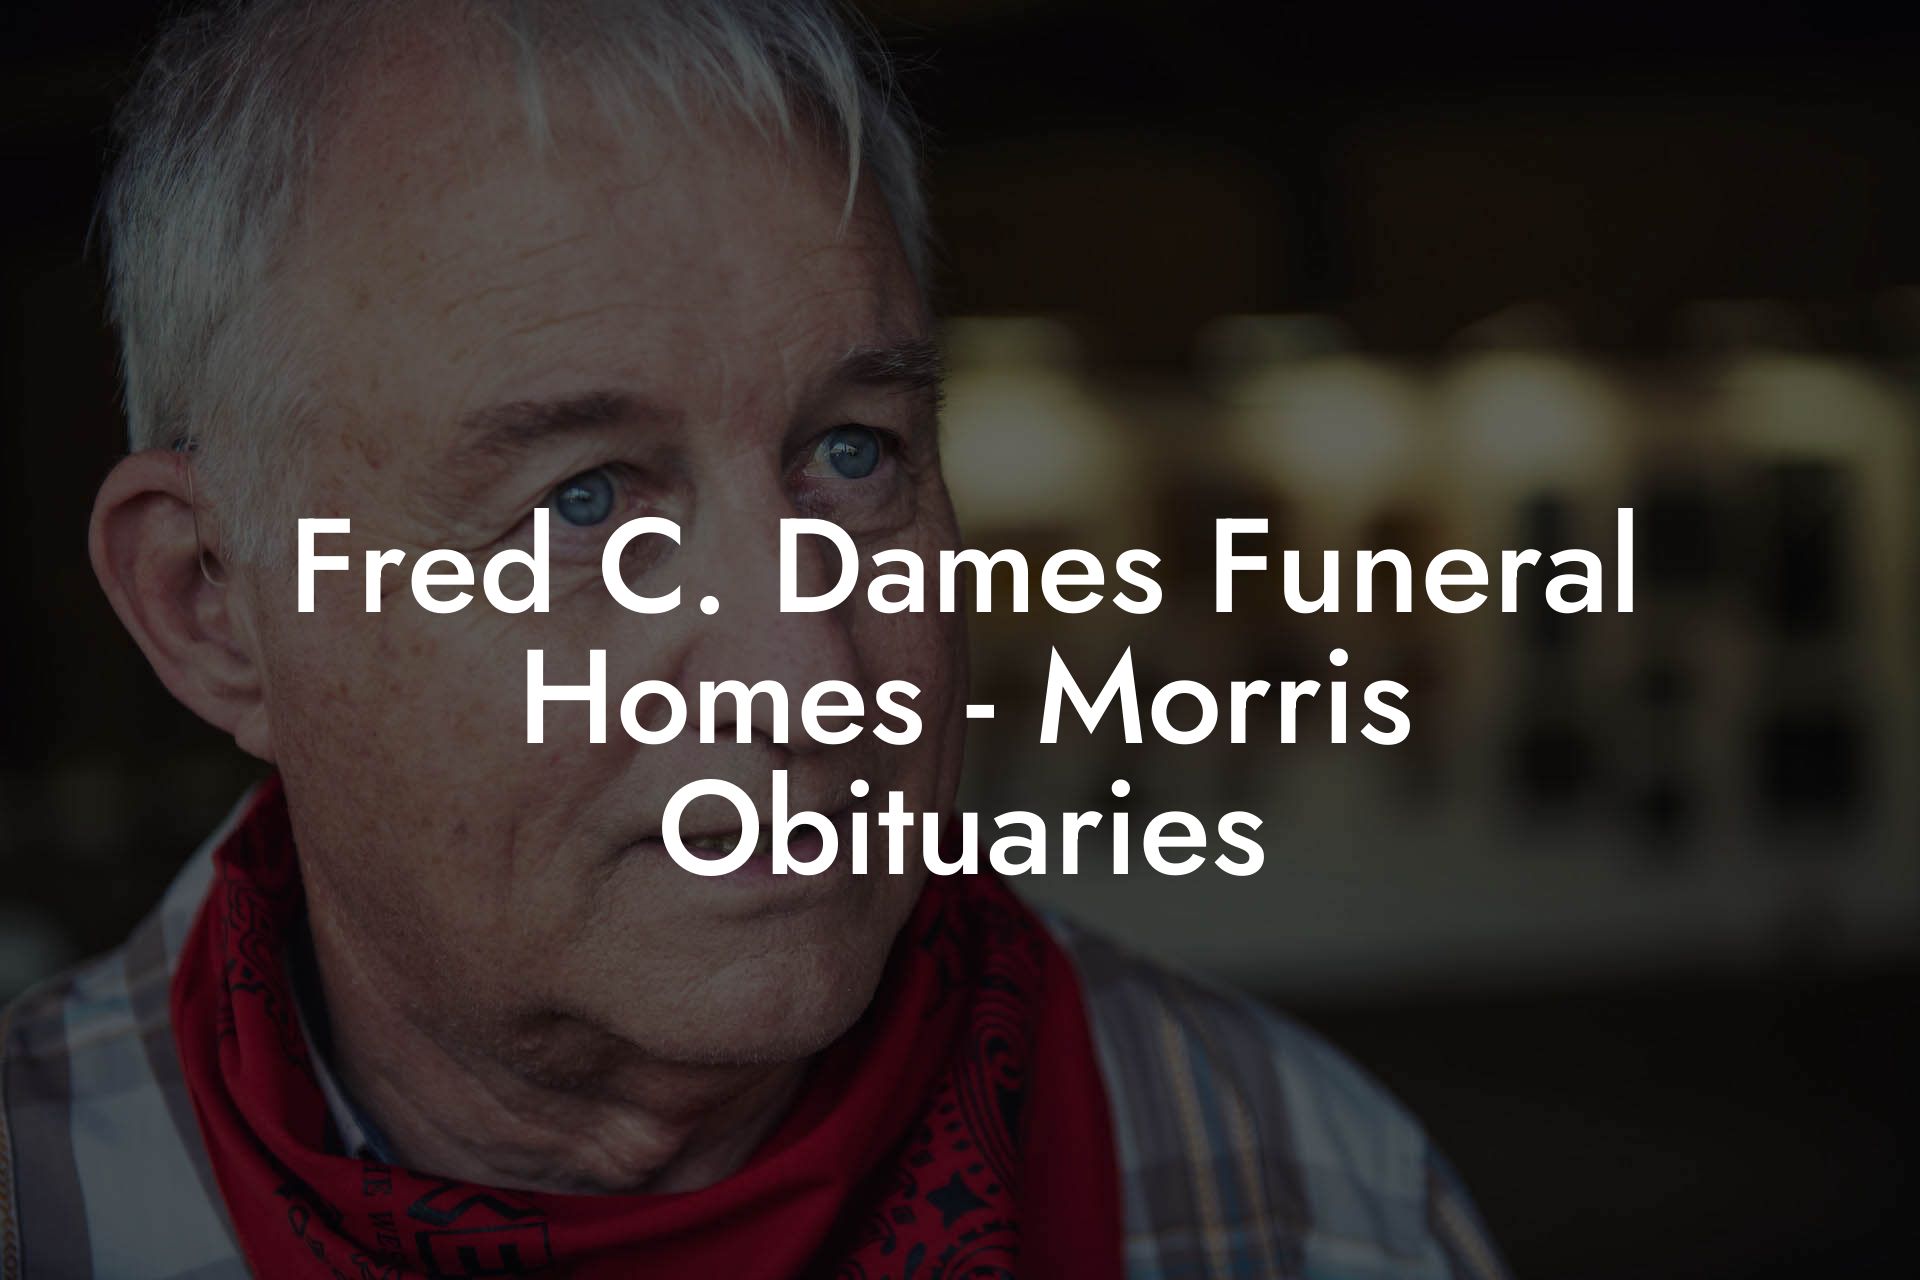 Fred C. Dames Funeral Homes - Morris Obituaries